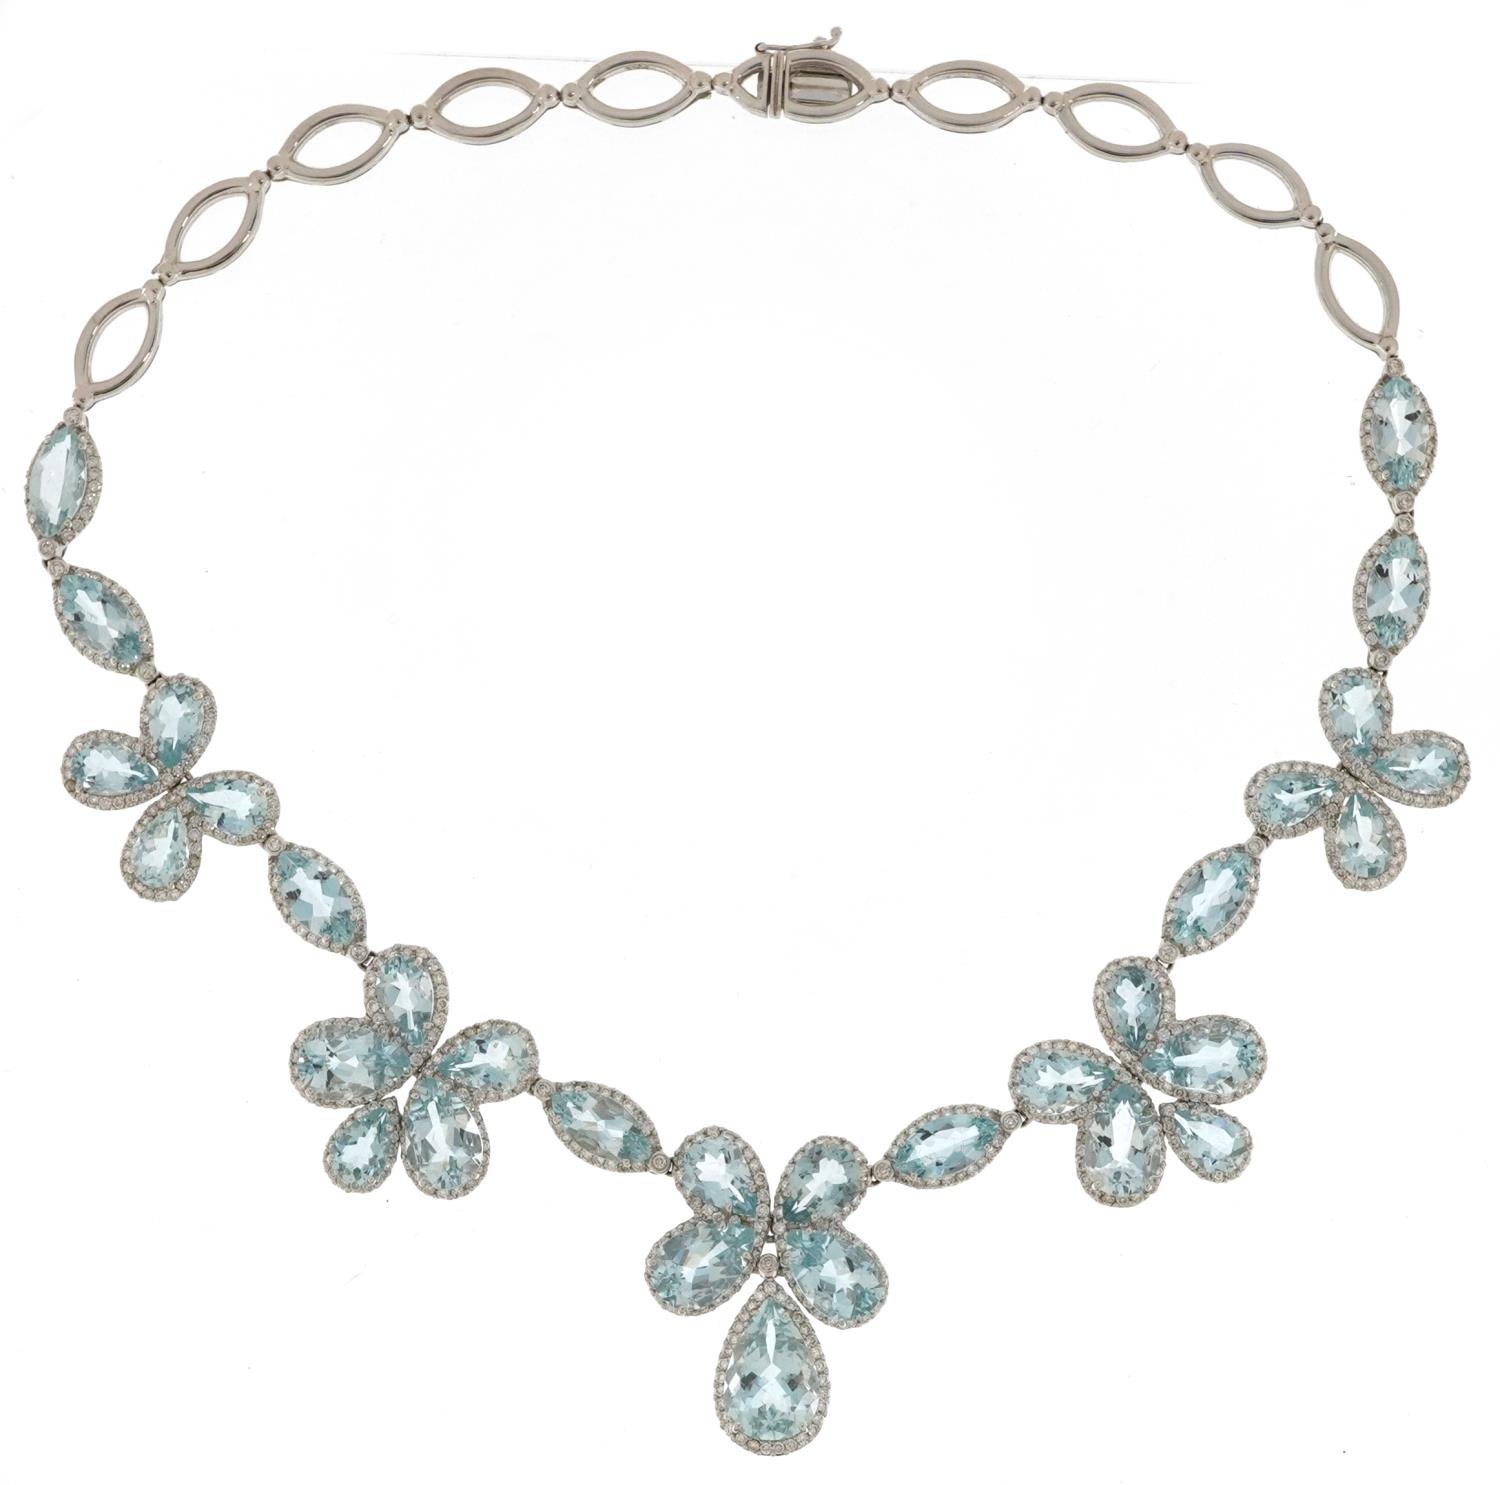 Good 18ct white gold teardrop aquamarine and diamond floral necklace, the largest aquamarine - Image 4 of 9